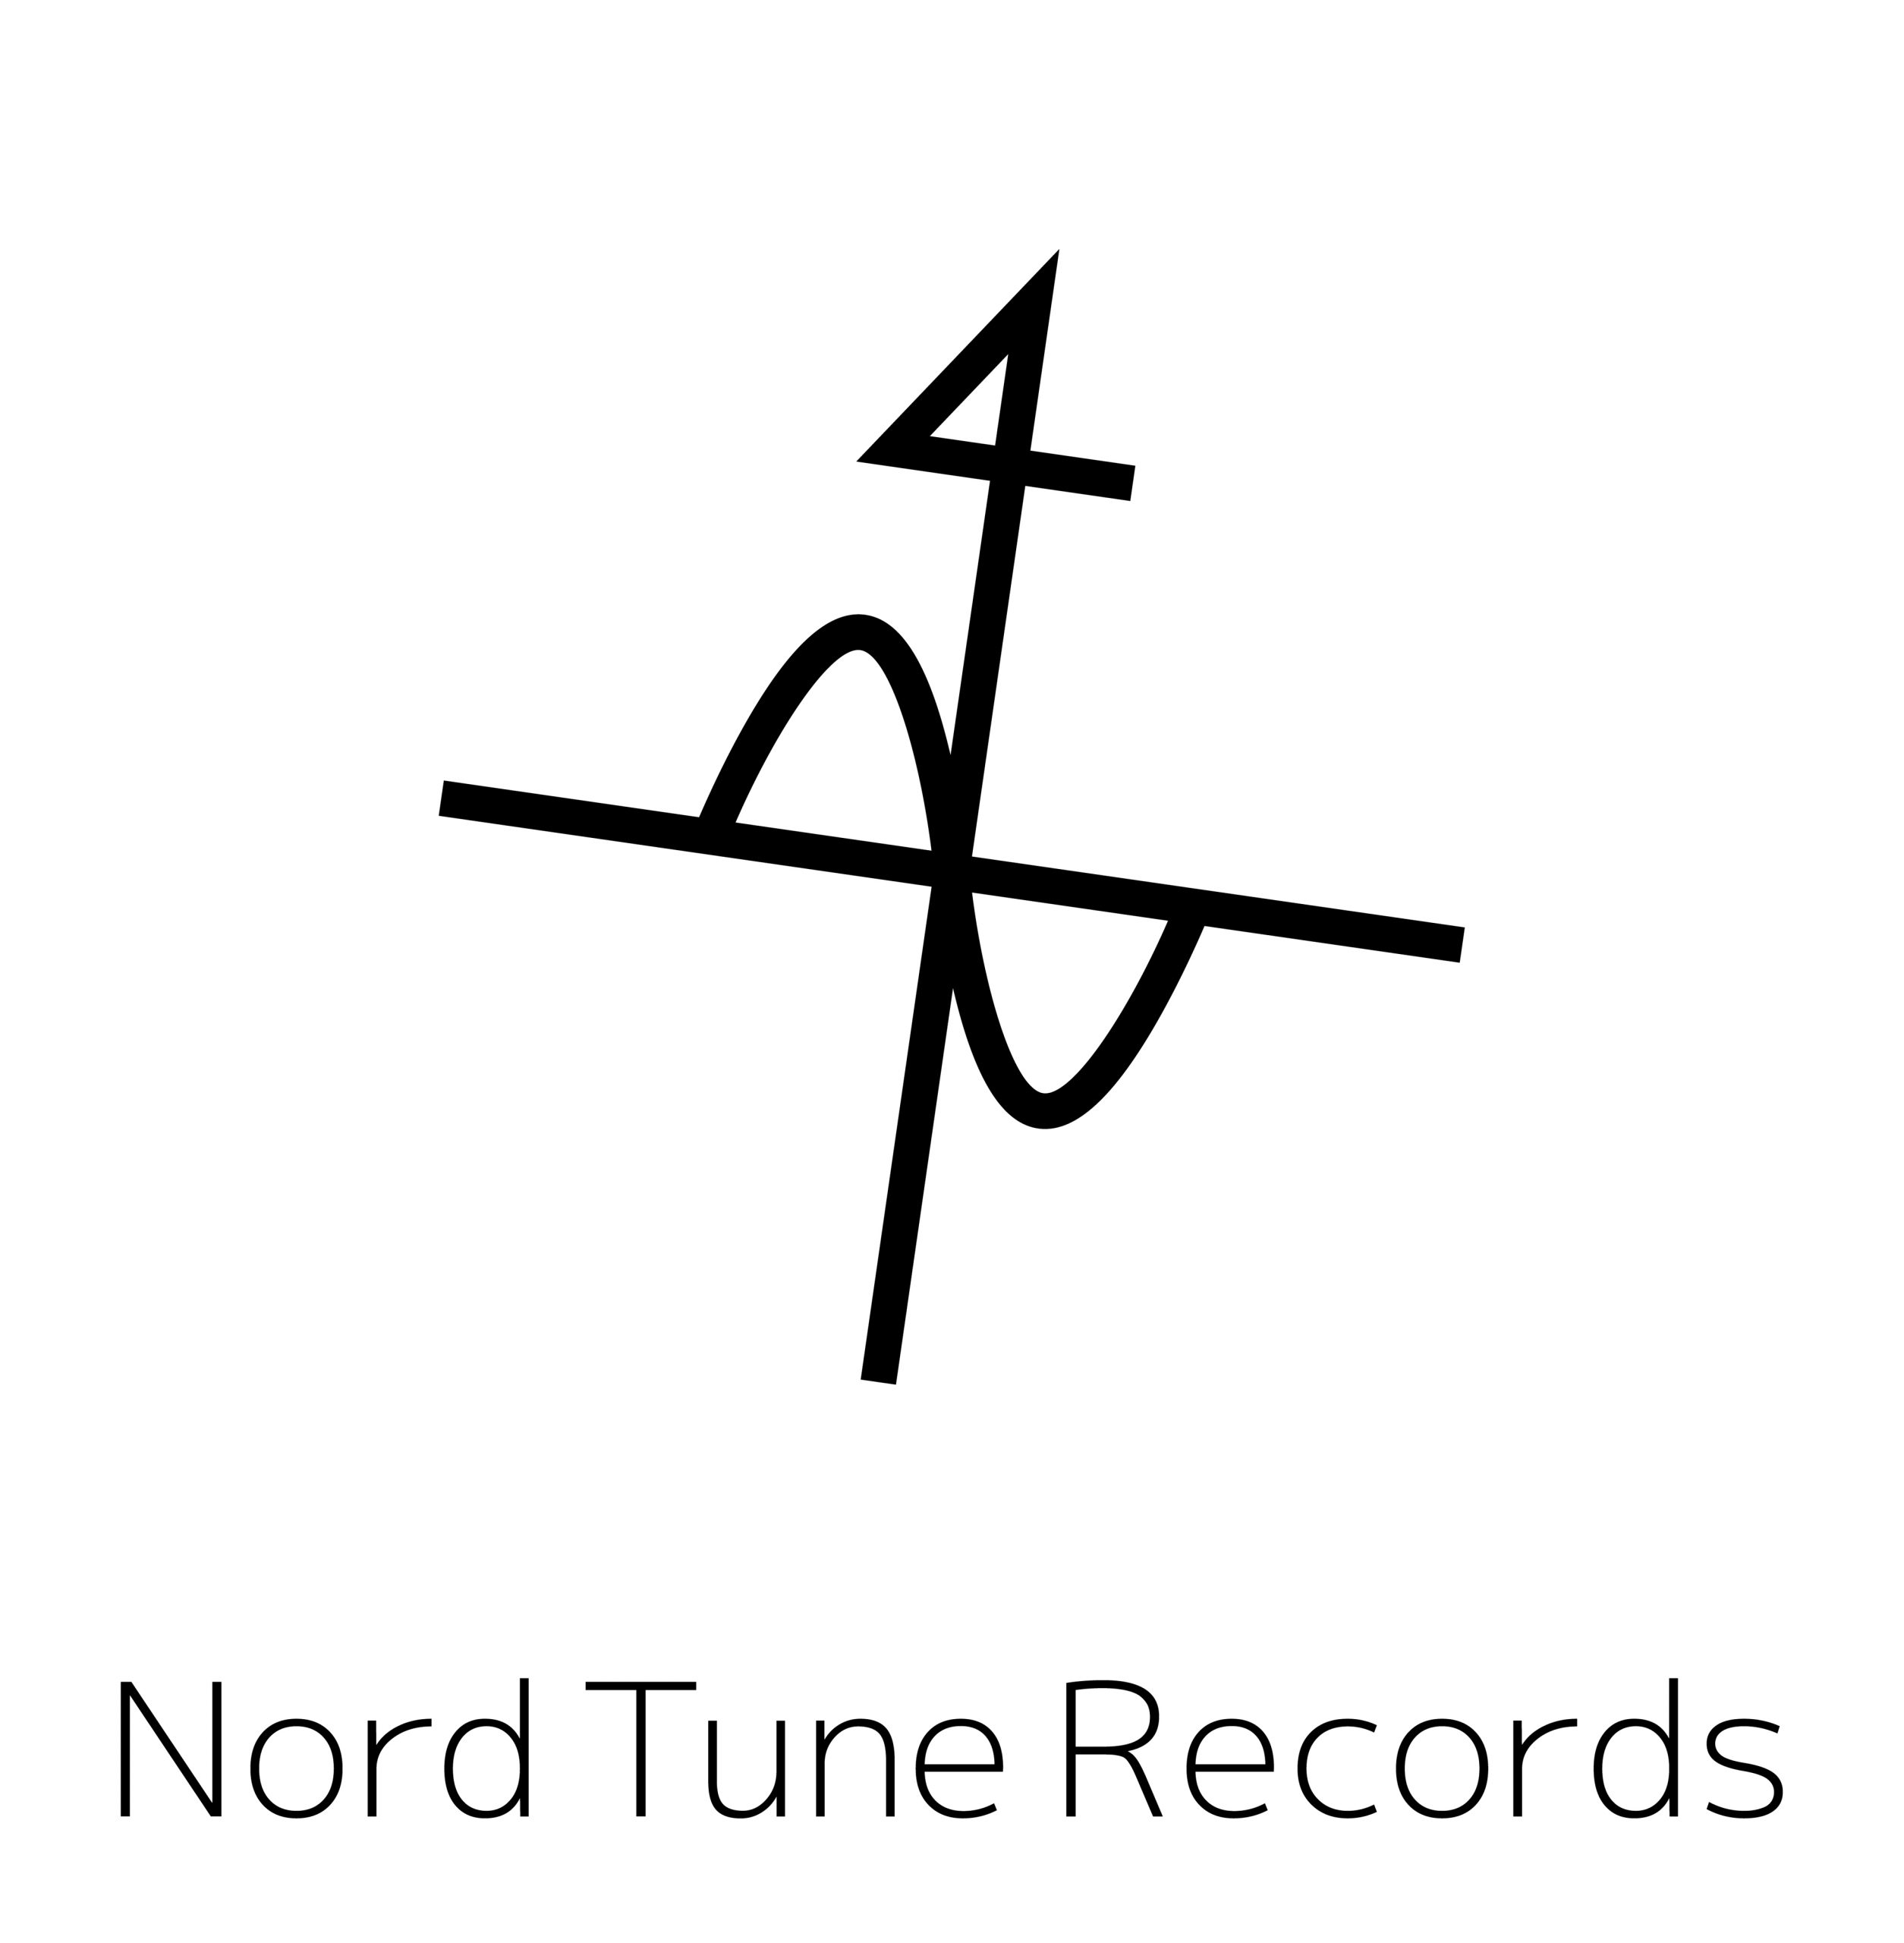 Nord Tune Recordsアイドルメンバー募集